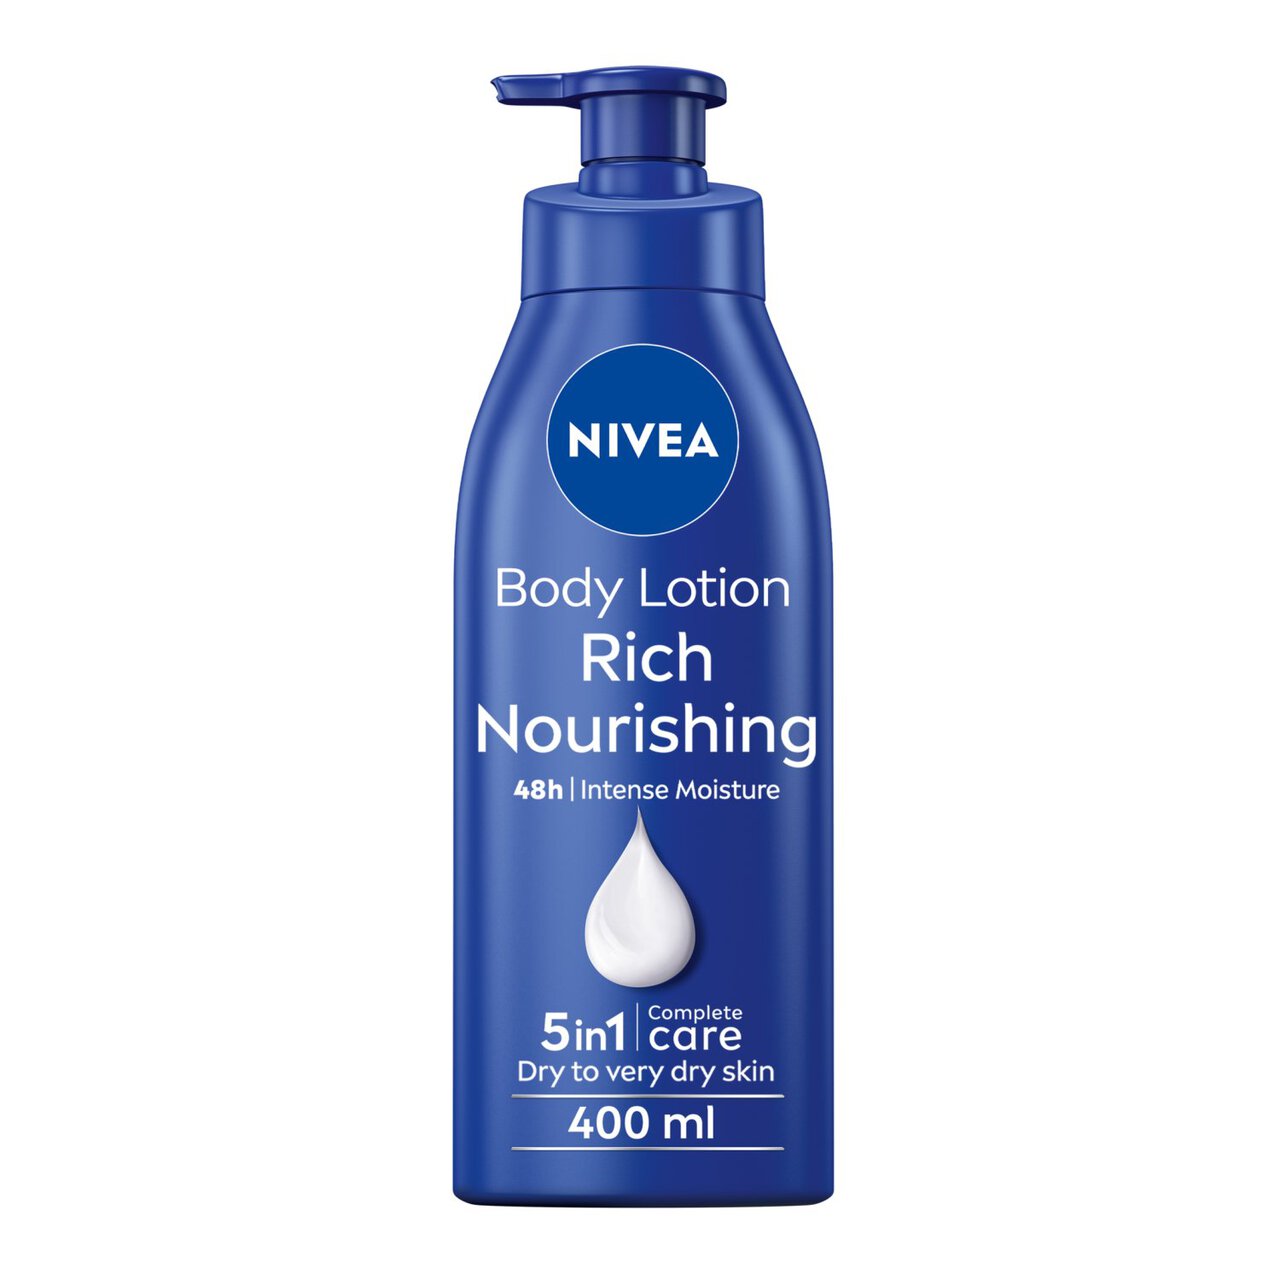 NIVEA Body Lotion for Dry Skin, Rich Nourishing 400ml